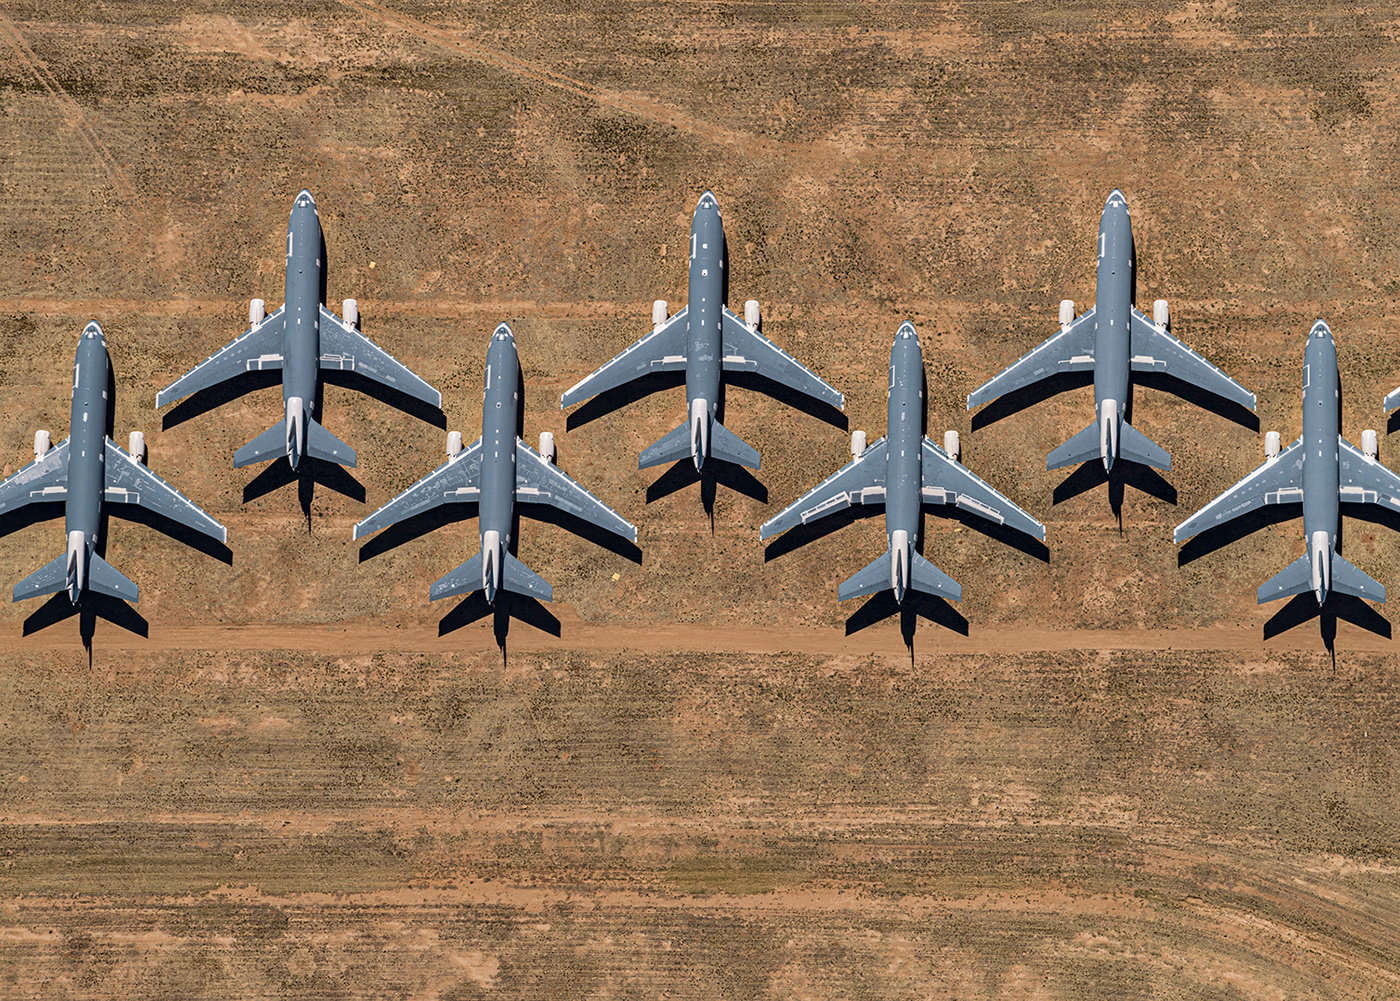 boneyard airplane desert arizona graveyard Military tucson usa america plane